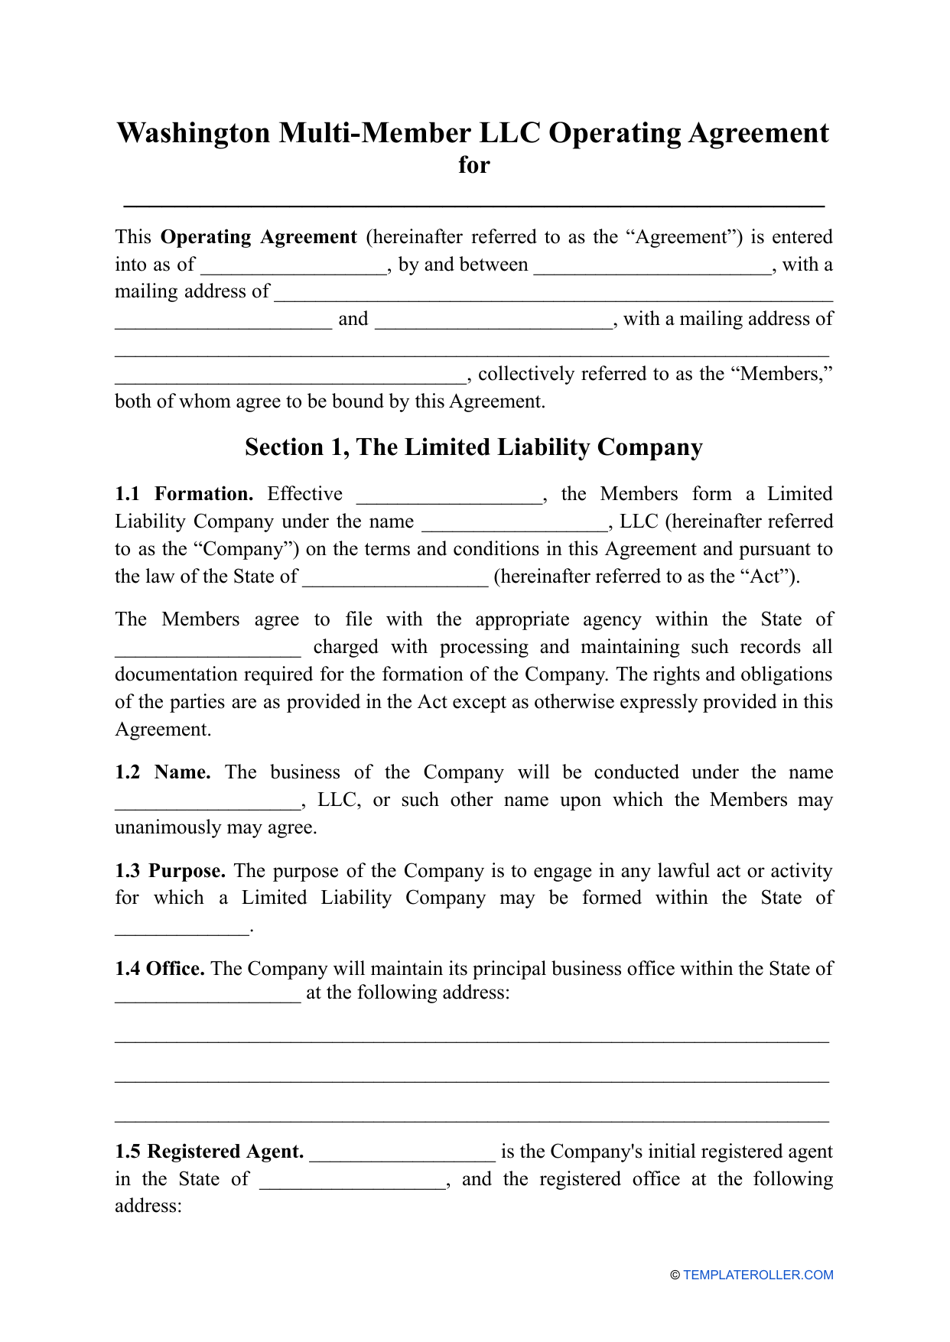 Multi-Member LLC Operating Agreement Template - Washington, Page 1